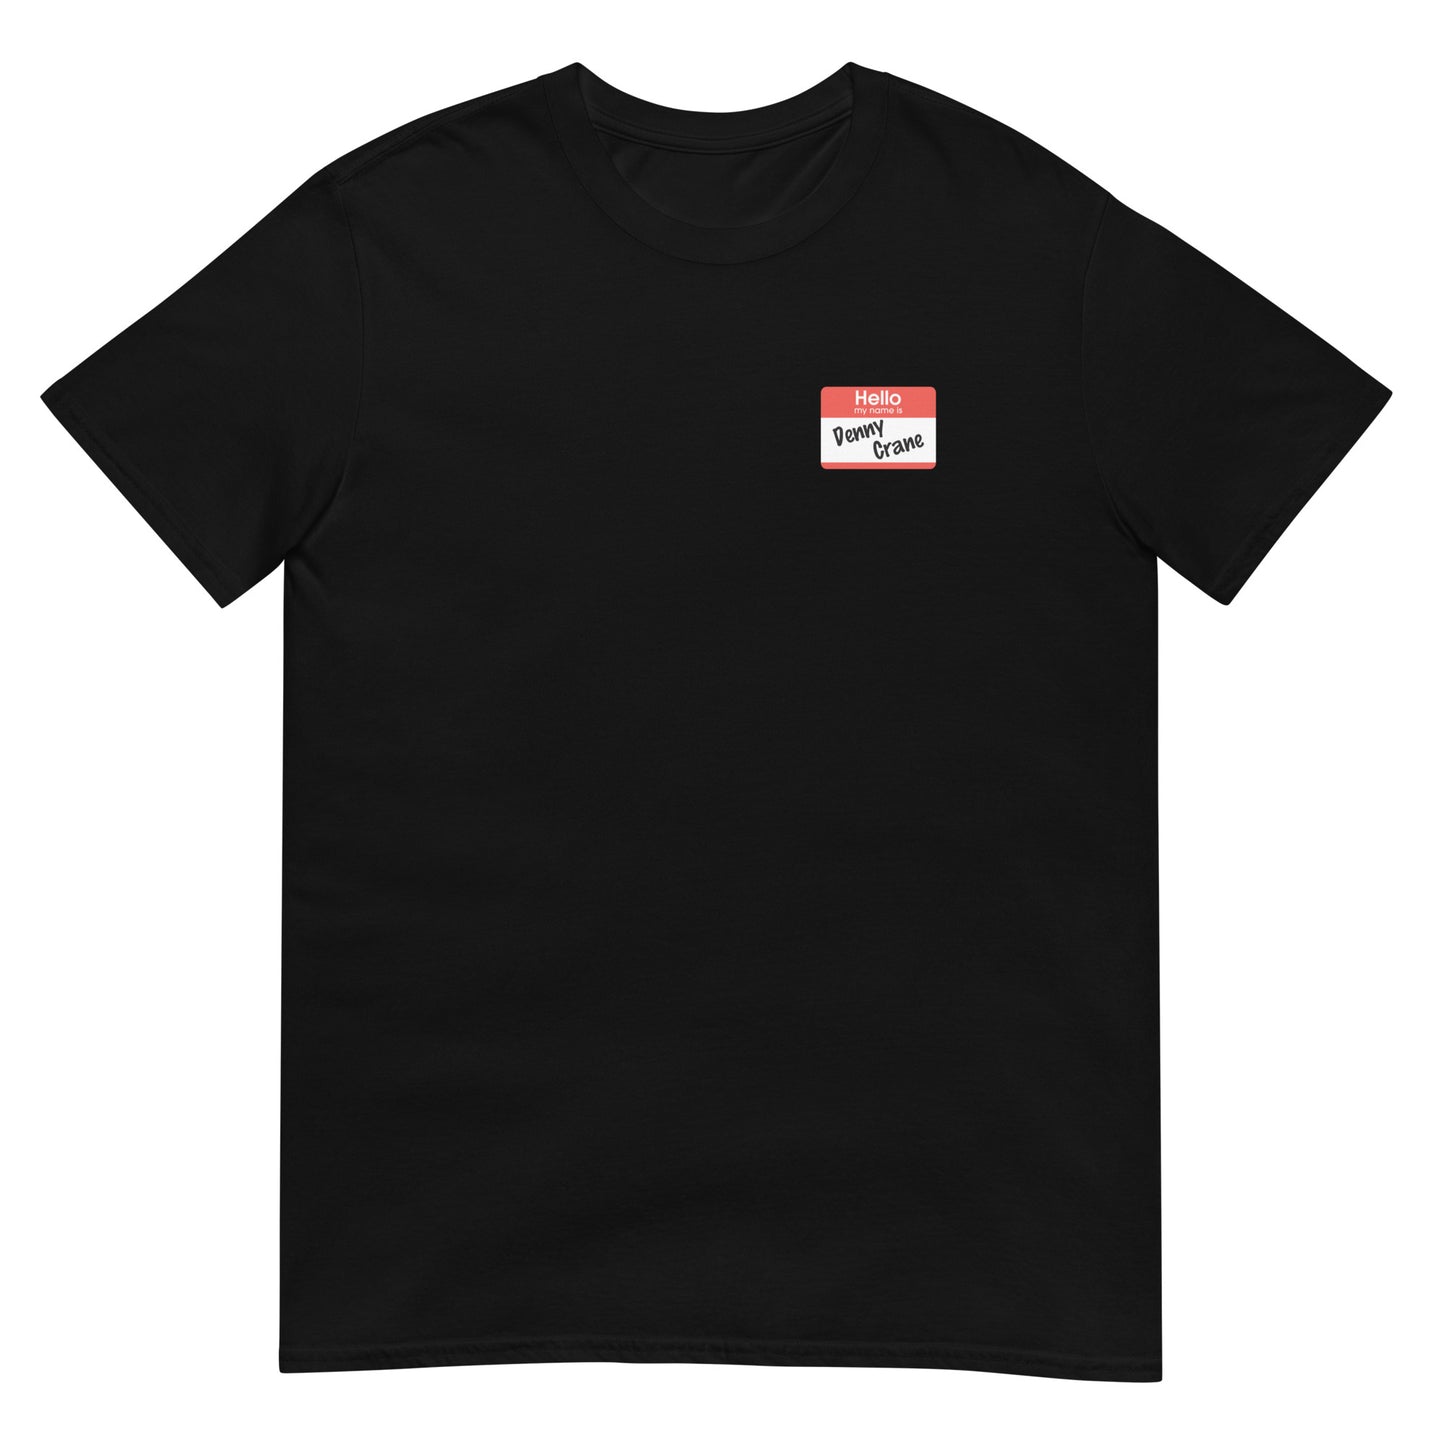 Denny Crane Unisex T-Shirt